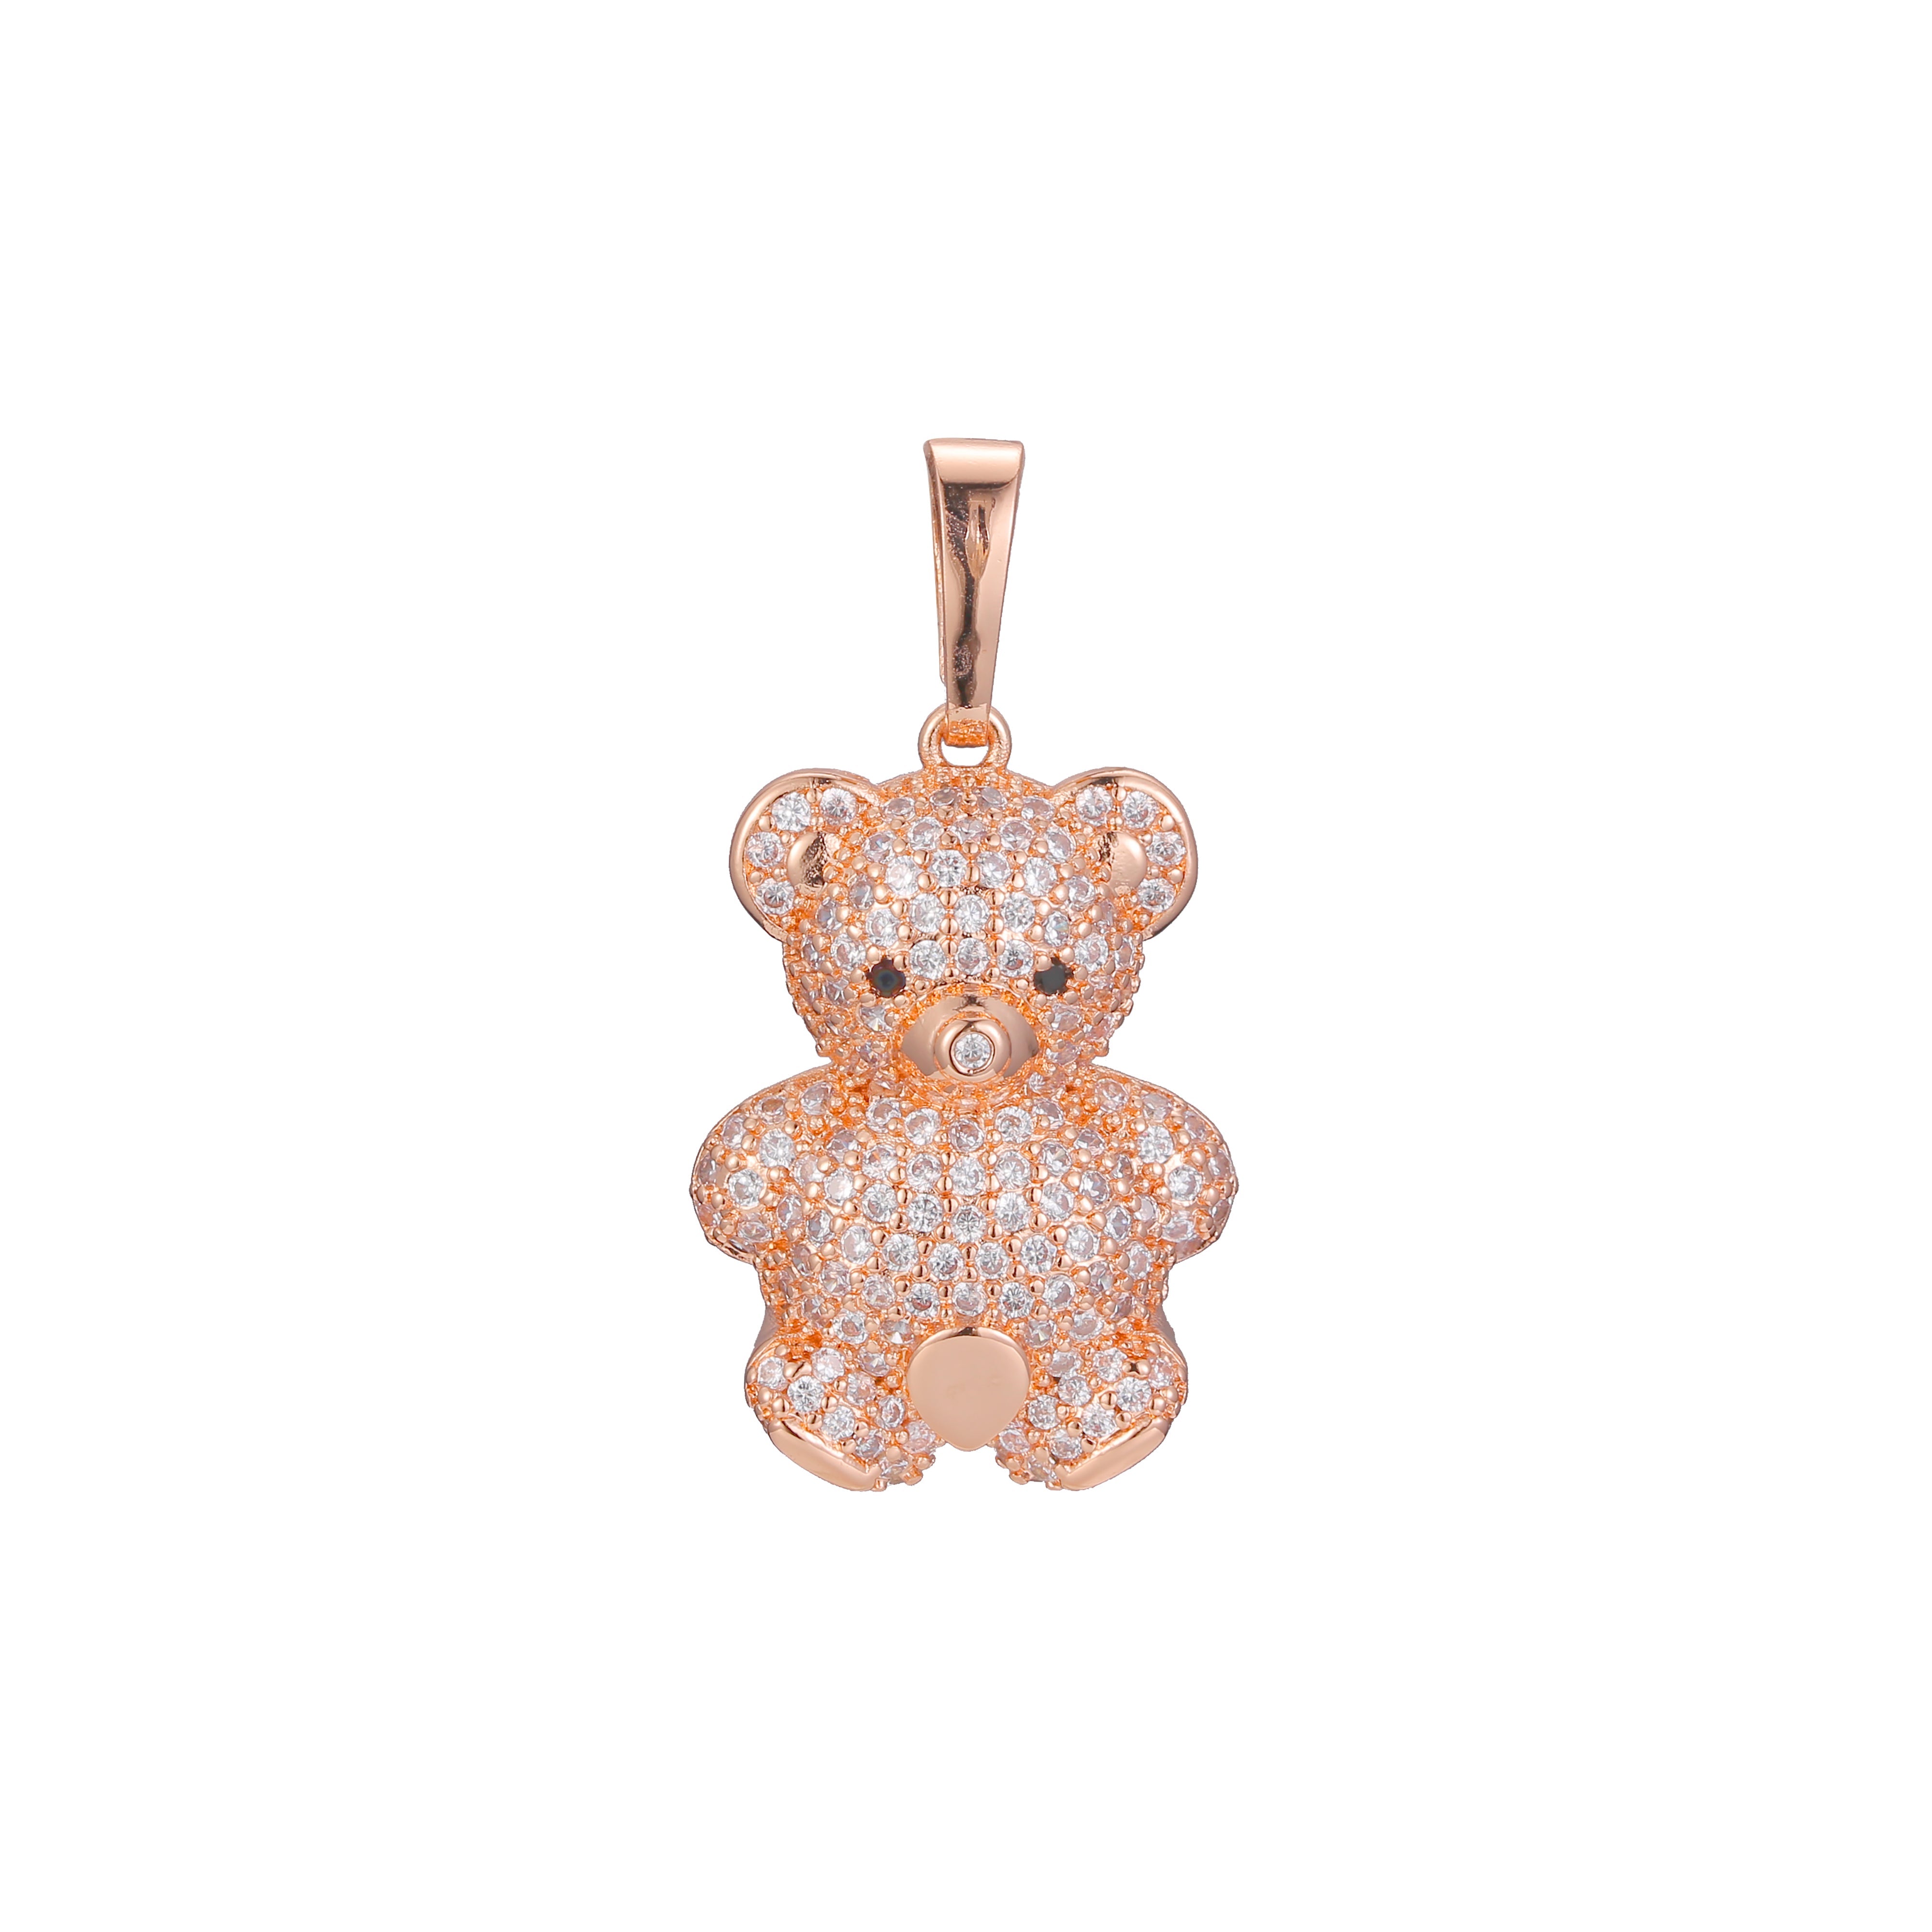 Bear animal pendant in Rose Gold, 14K Gold plating colors